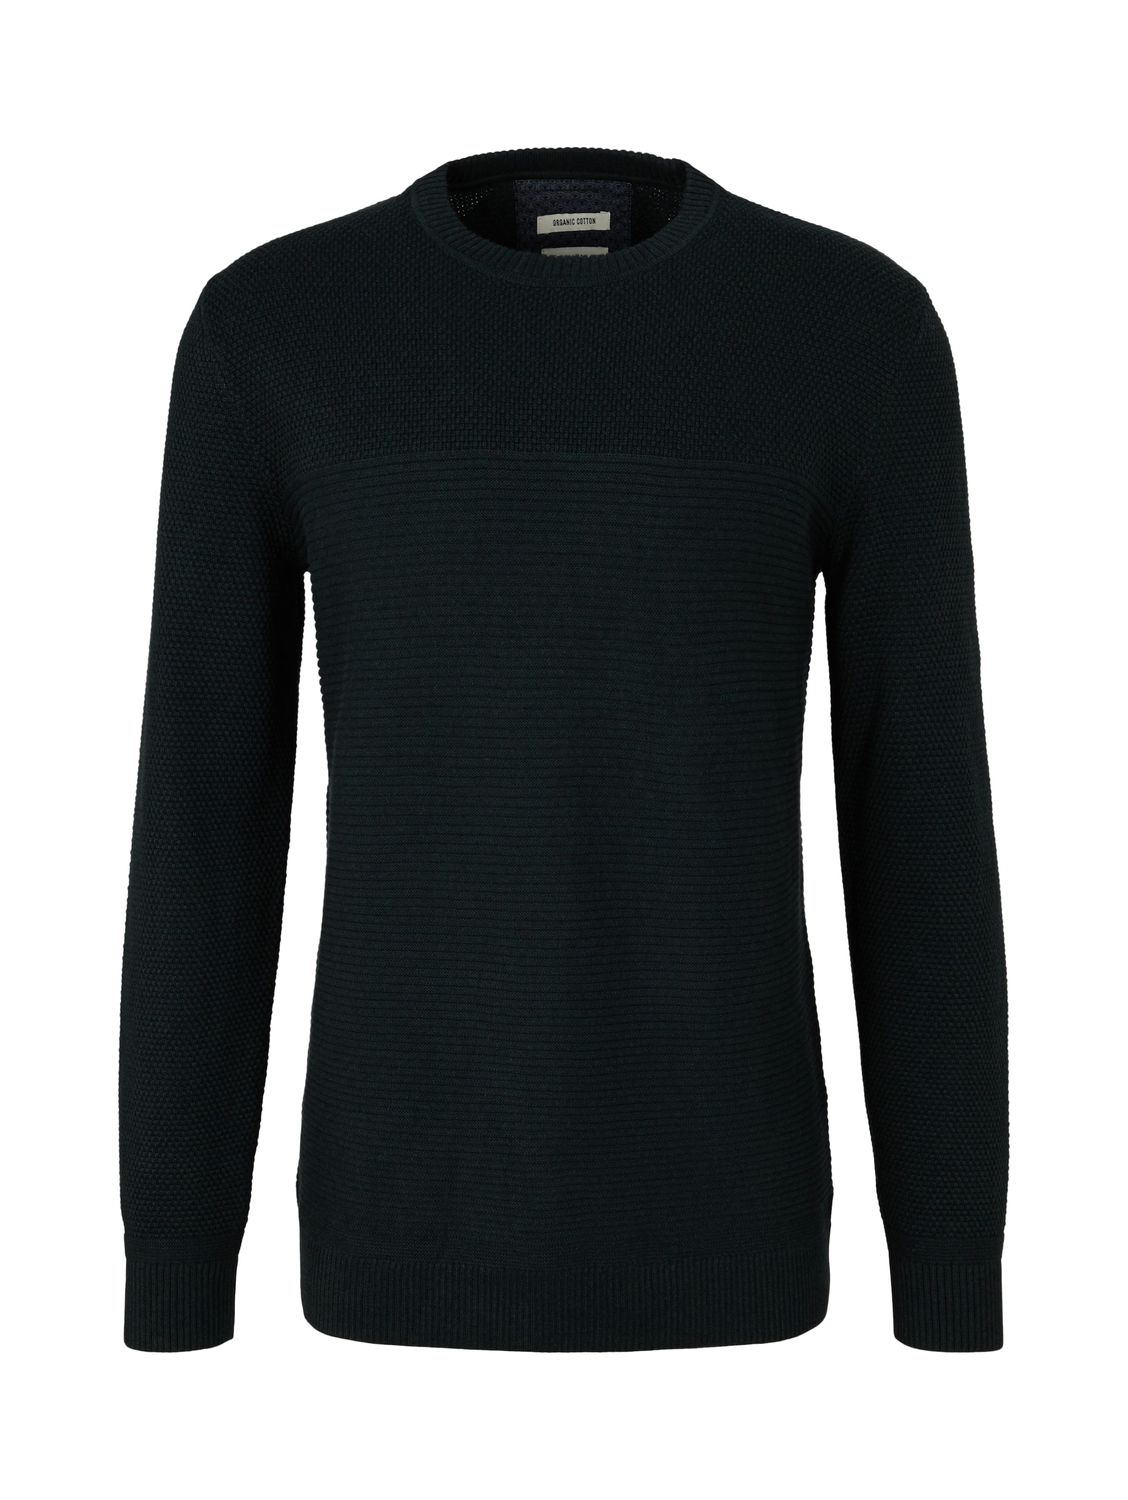 Пуловер Tom Tailor BASIC STRUCTURED, зеленый пуловер tom tailor denim structured doublelayer серый